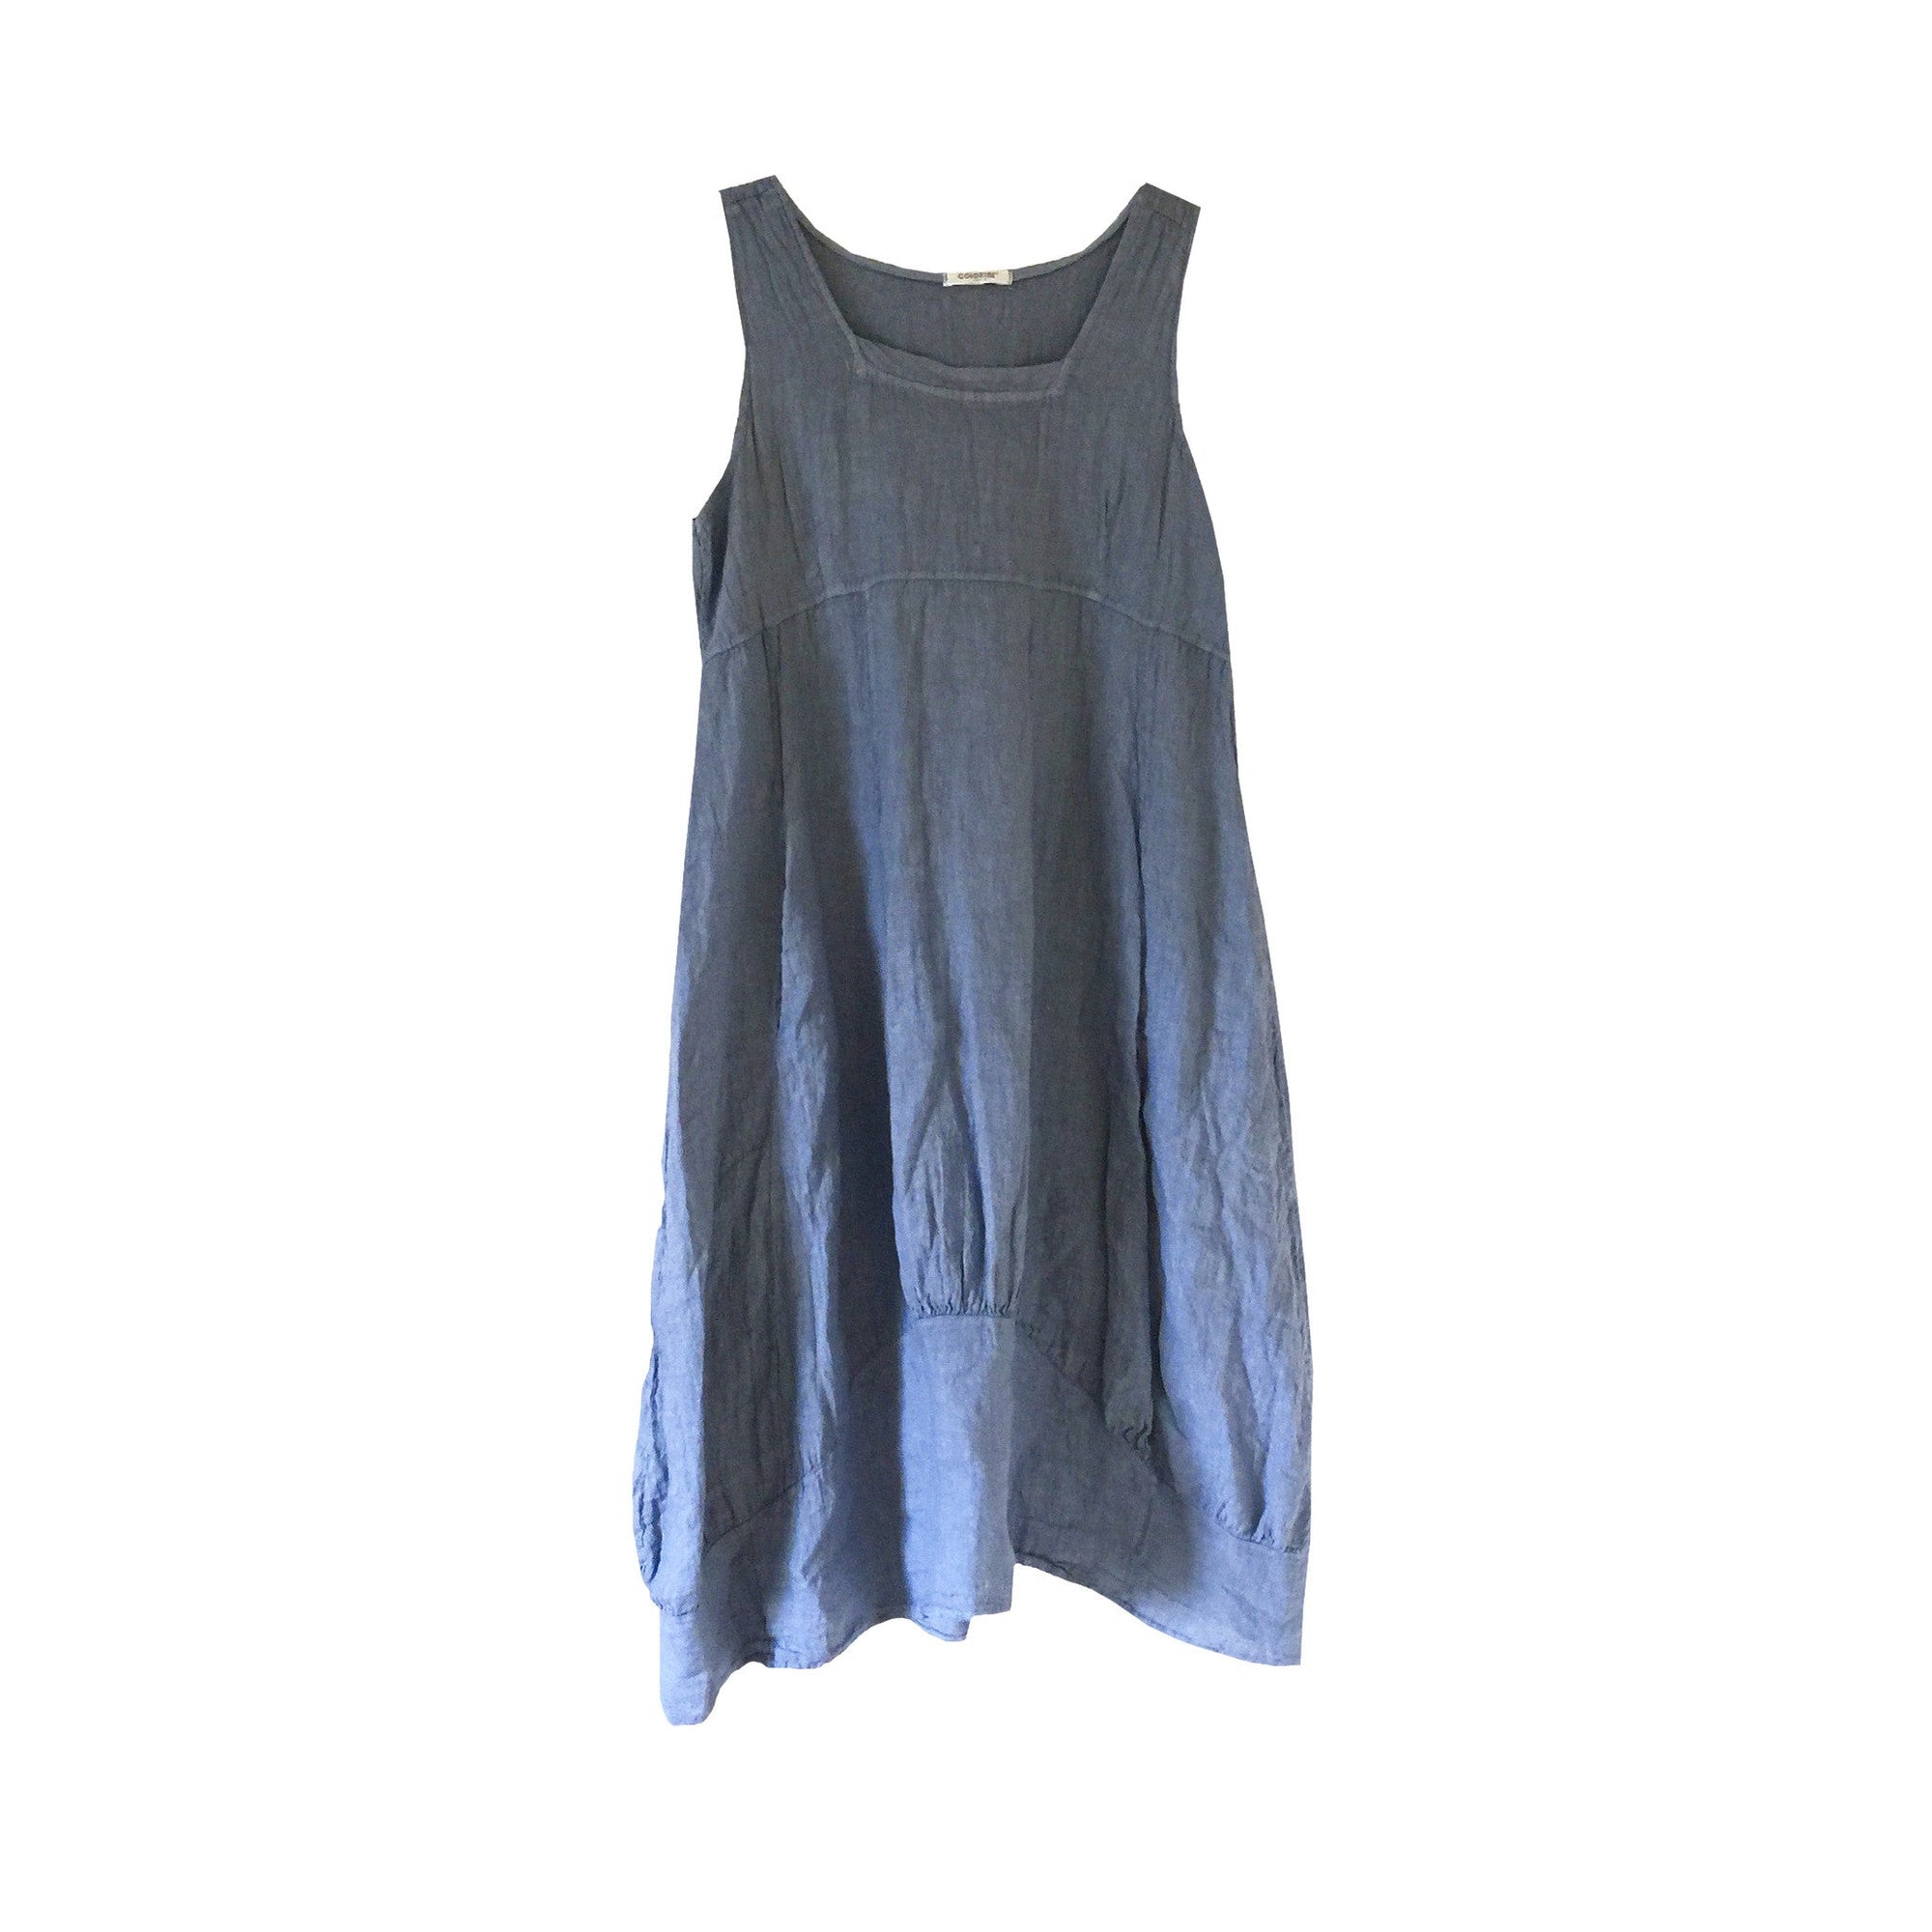  Sleeveless Linen Dress - Denim Blue, TO-Terminal One, Putti Fine Furnishings